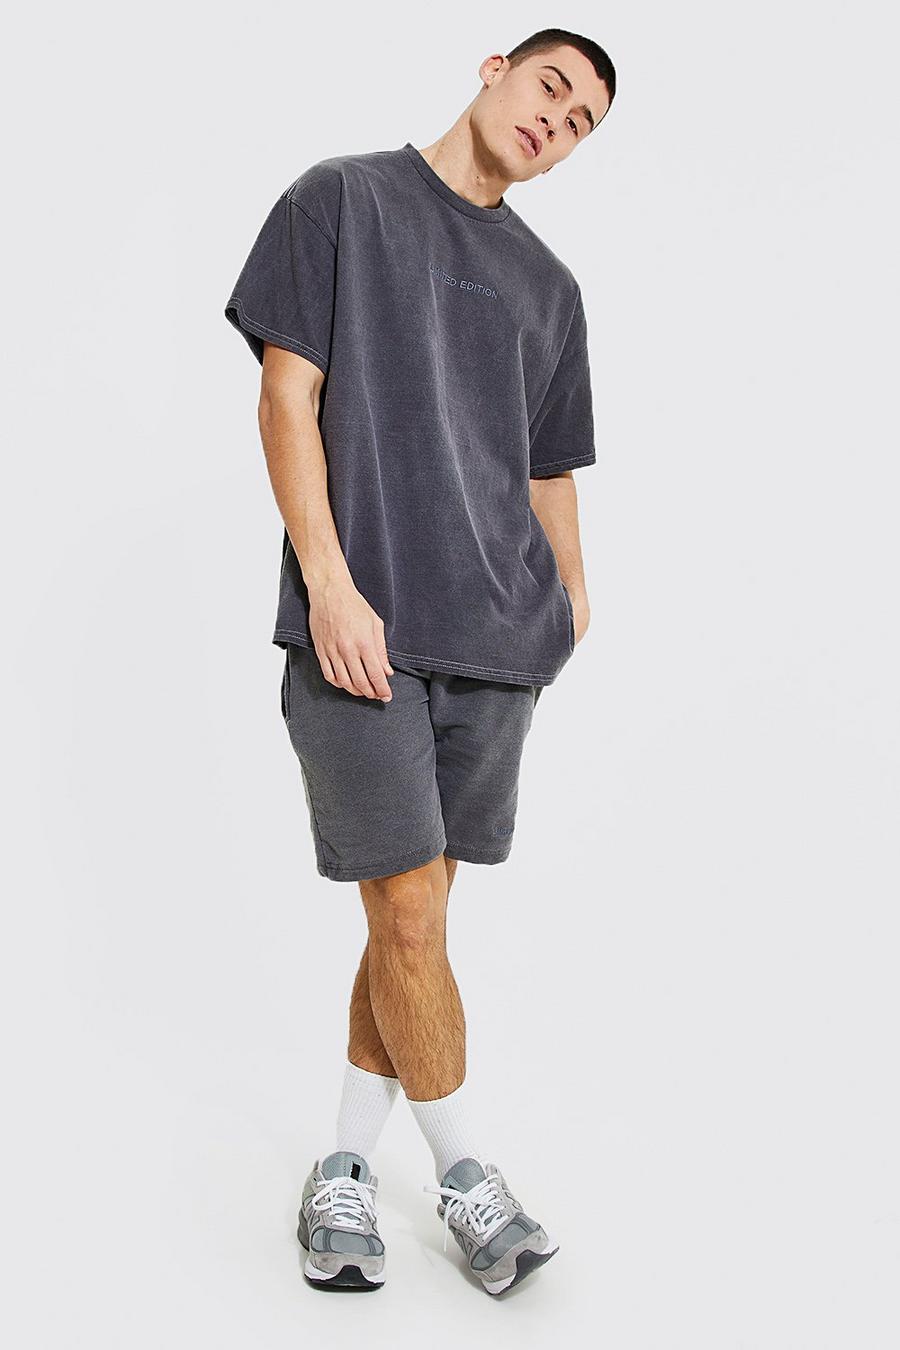 Charcoal grey Oversized Overdye Lmtd T-shirt And Short Set